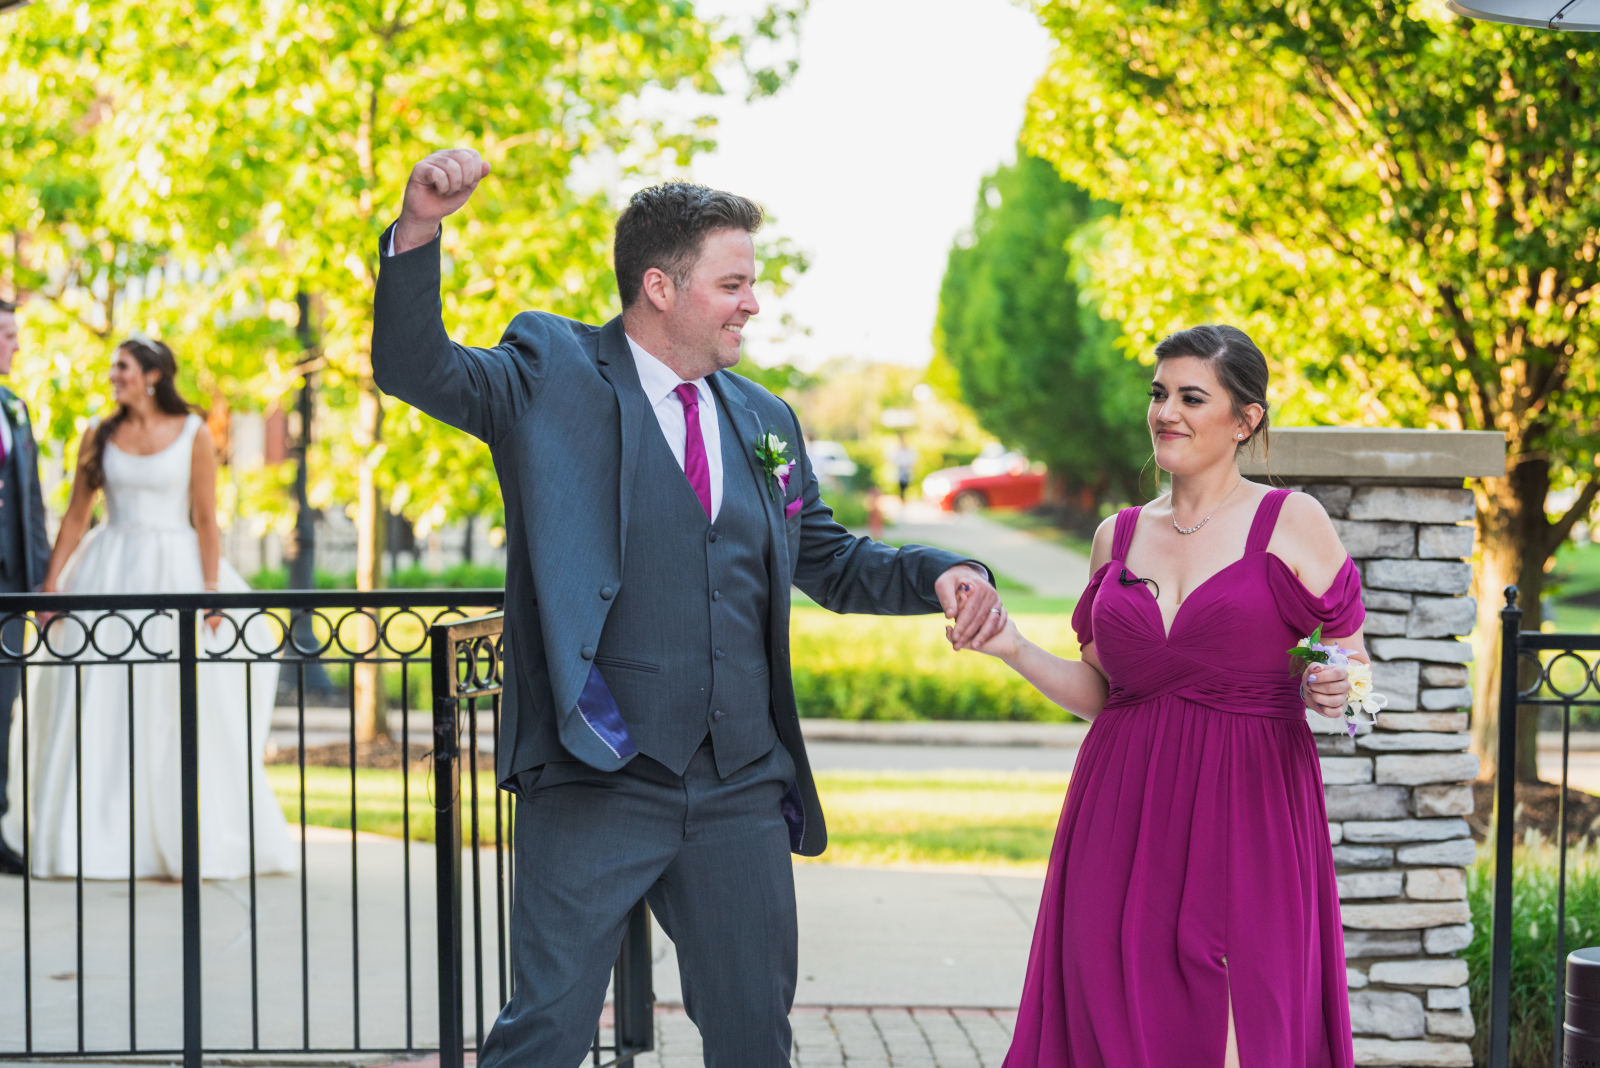 Bridesmaid and groomsman, bridal party entrance, dancing, fun bridal party entrance, metal fence, green trees, sweet wedding reception at Crocker Park, Westlake OH